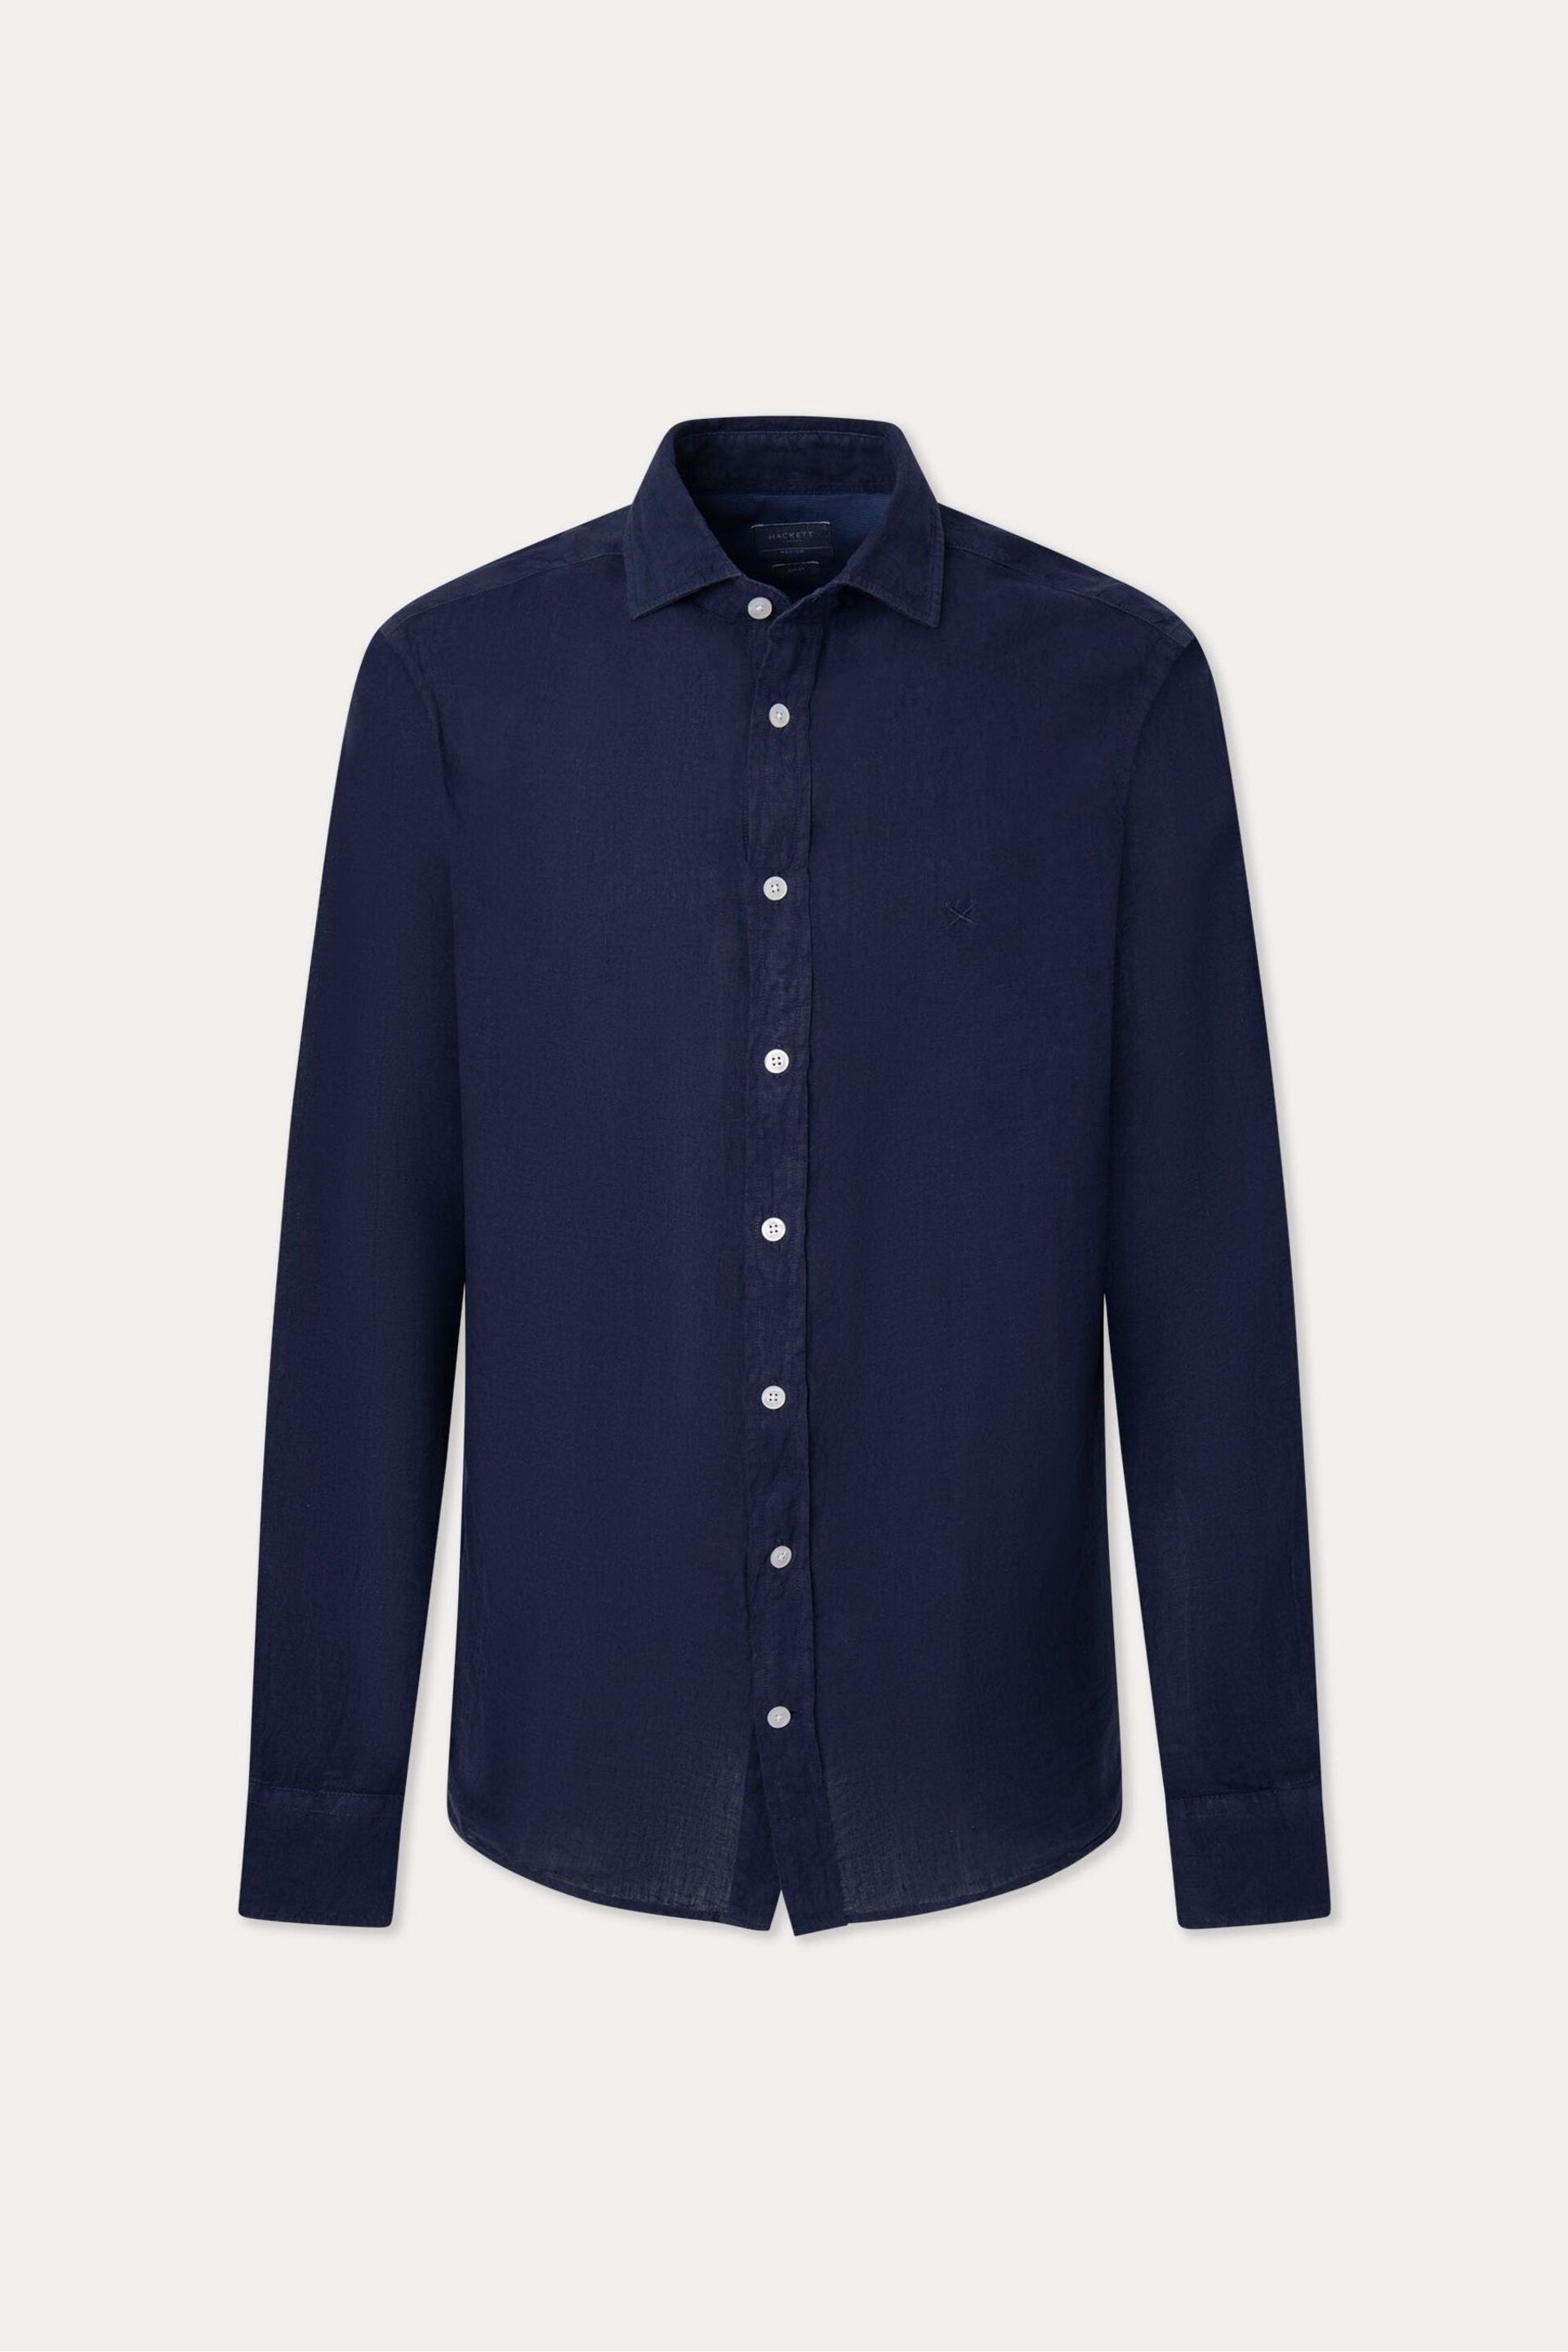 Hackett London Men Blue Long Sleeve Shirt - Image 1 of 4